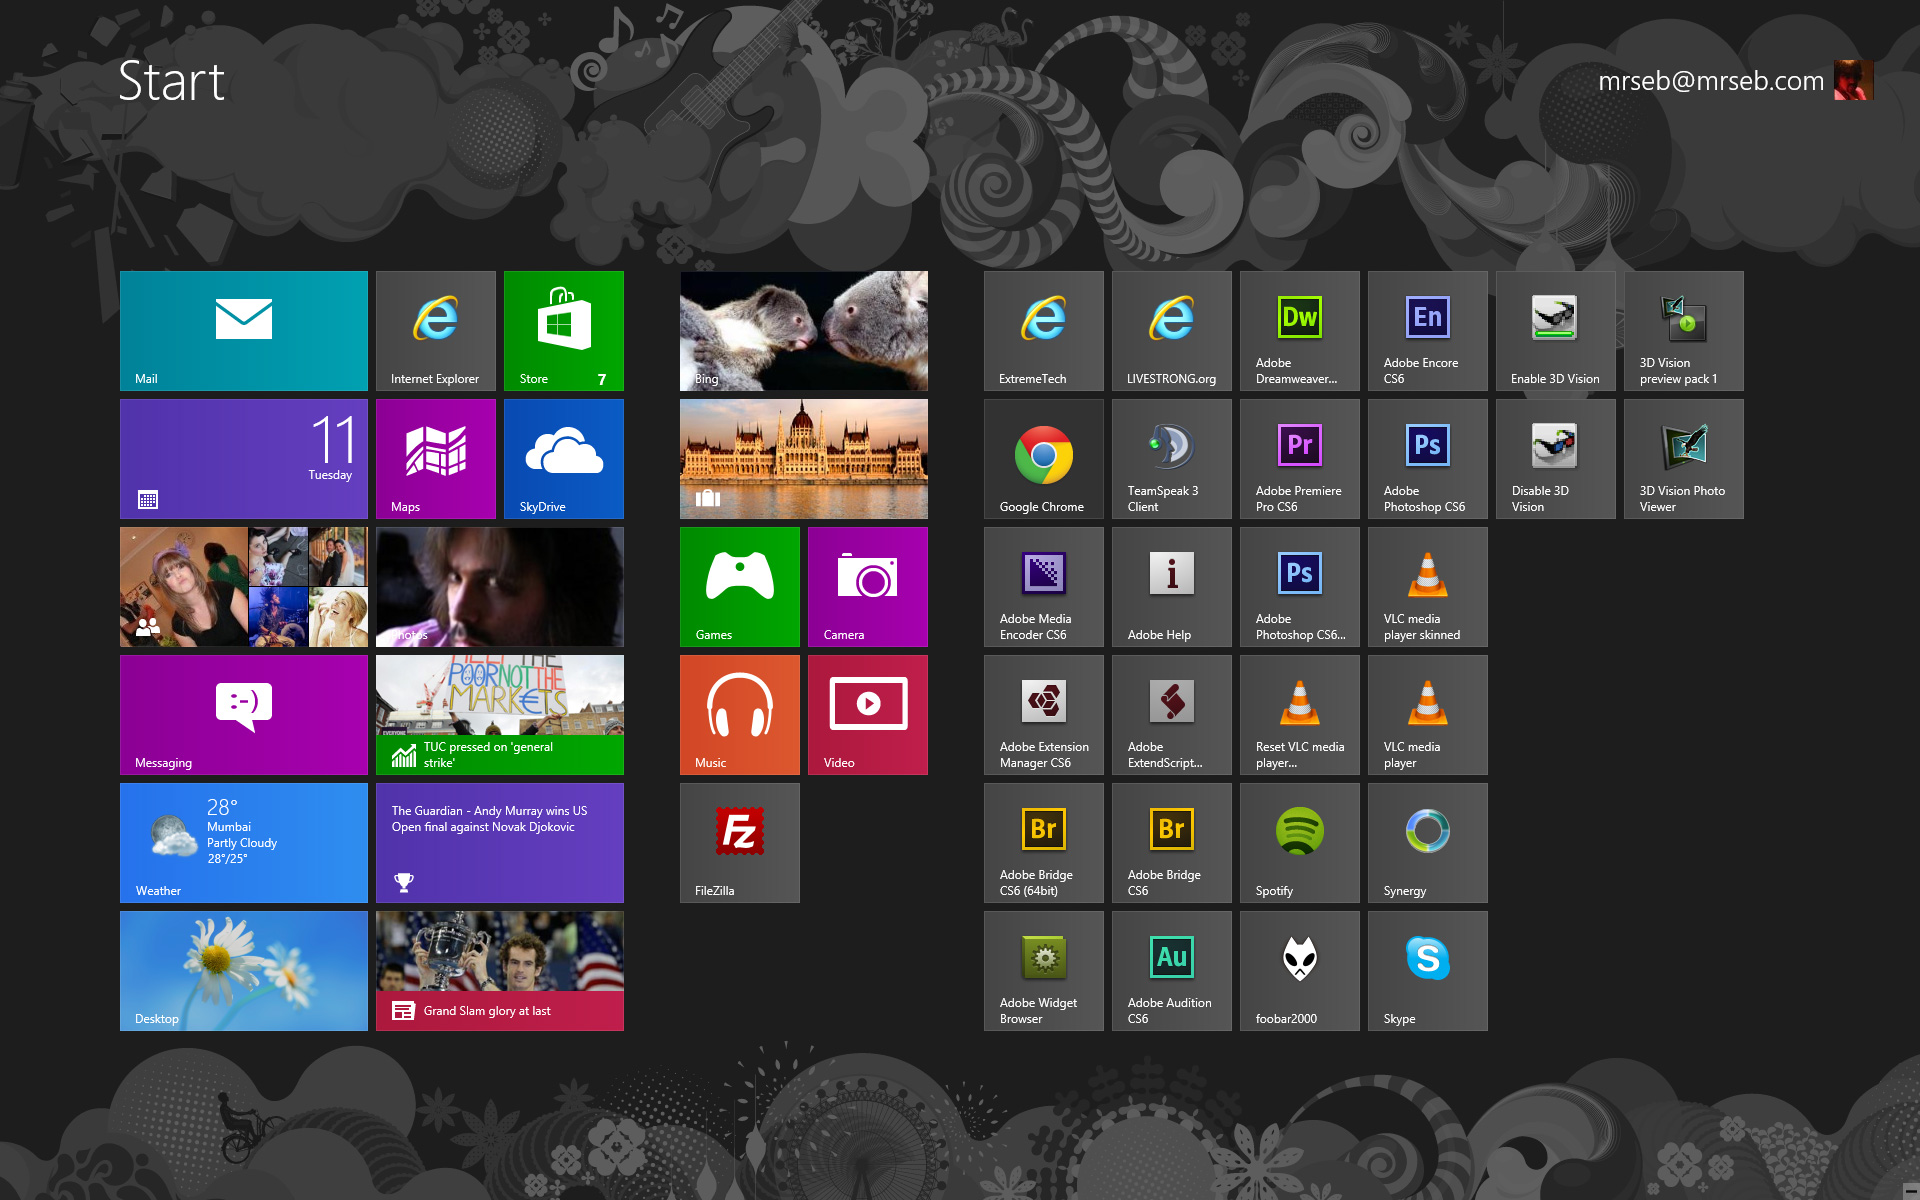 My Windows 8 Start Screen